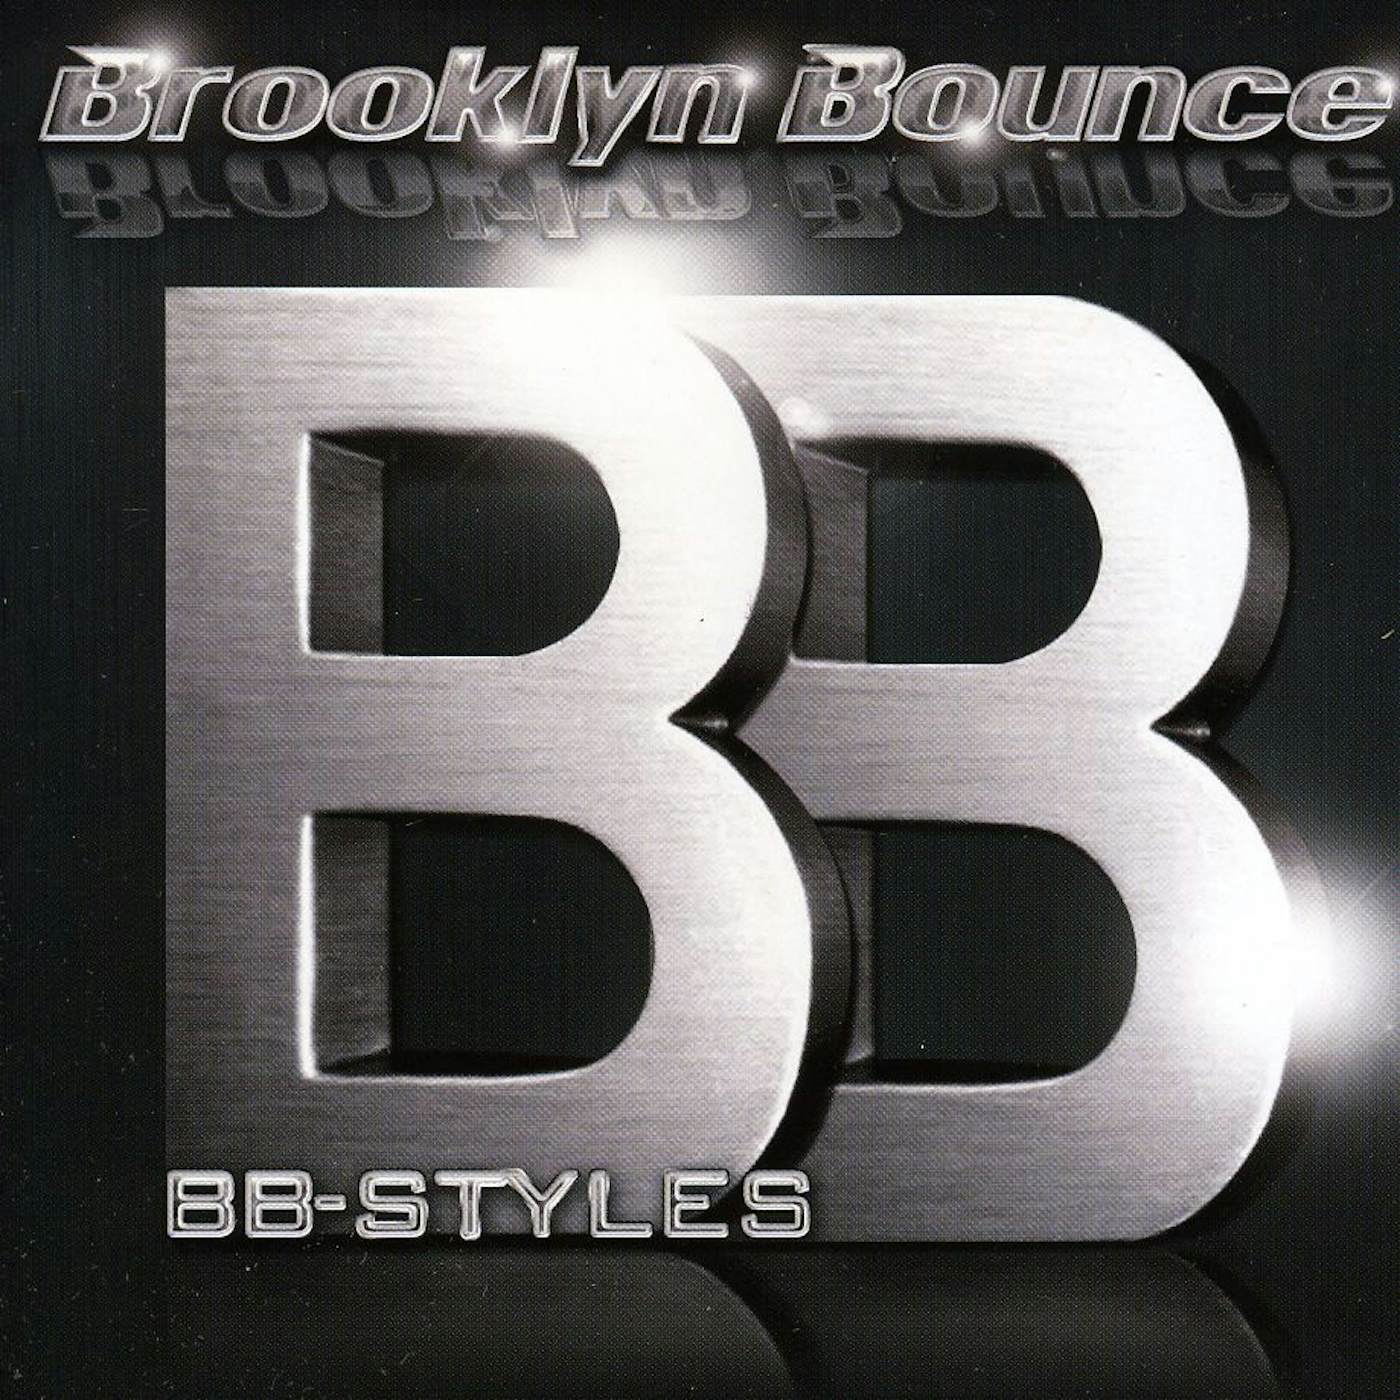 Brooklyn Bounce BB-STYLES CD